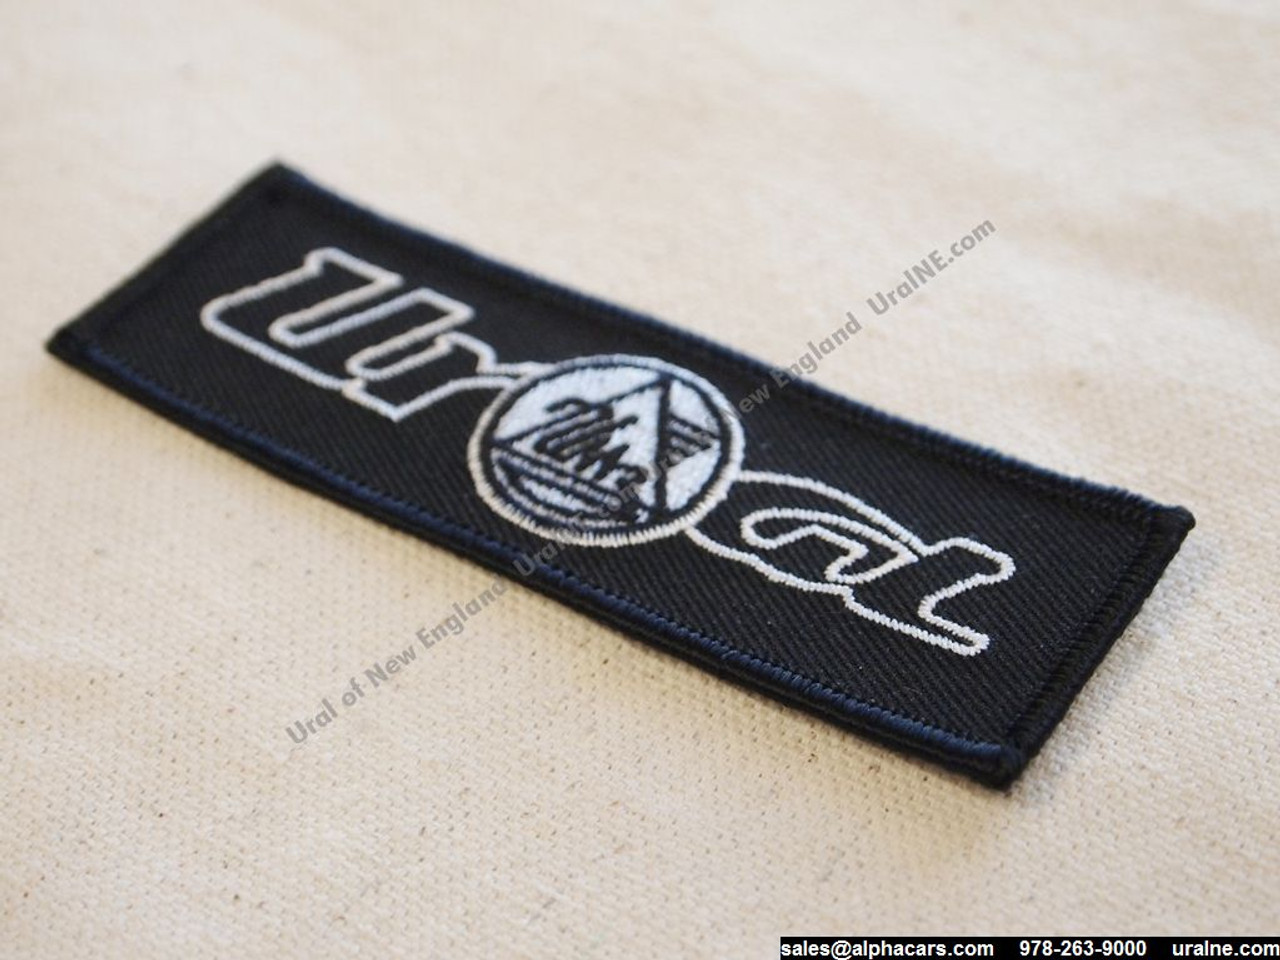 Ural Logo Patch Black/White